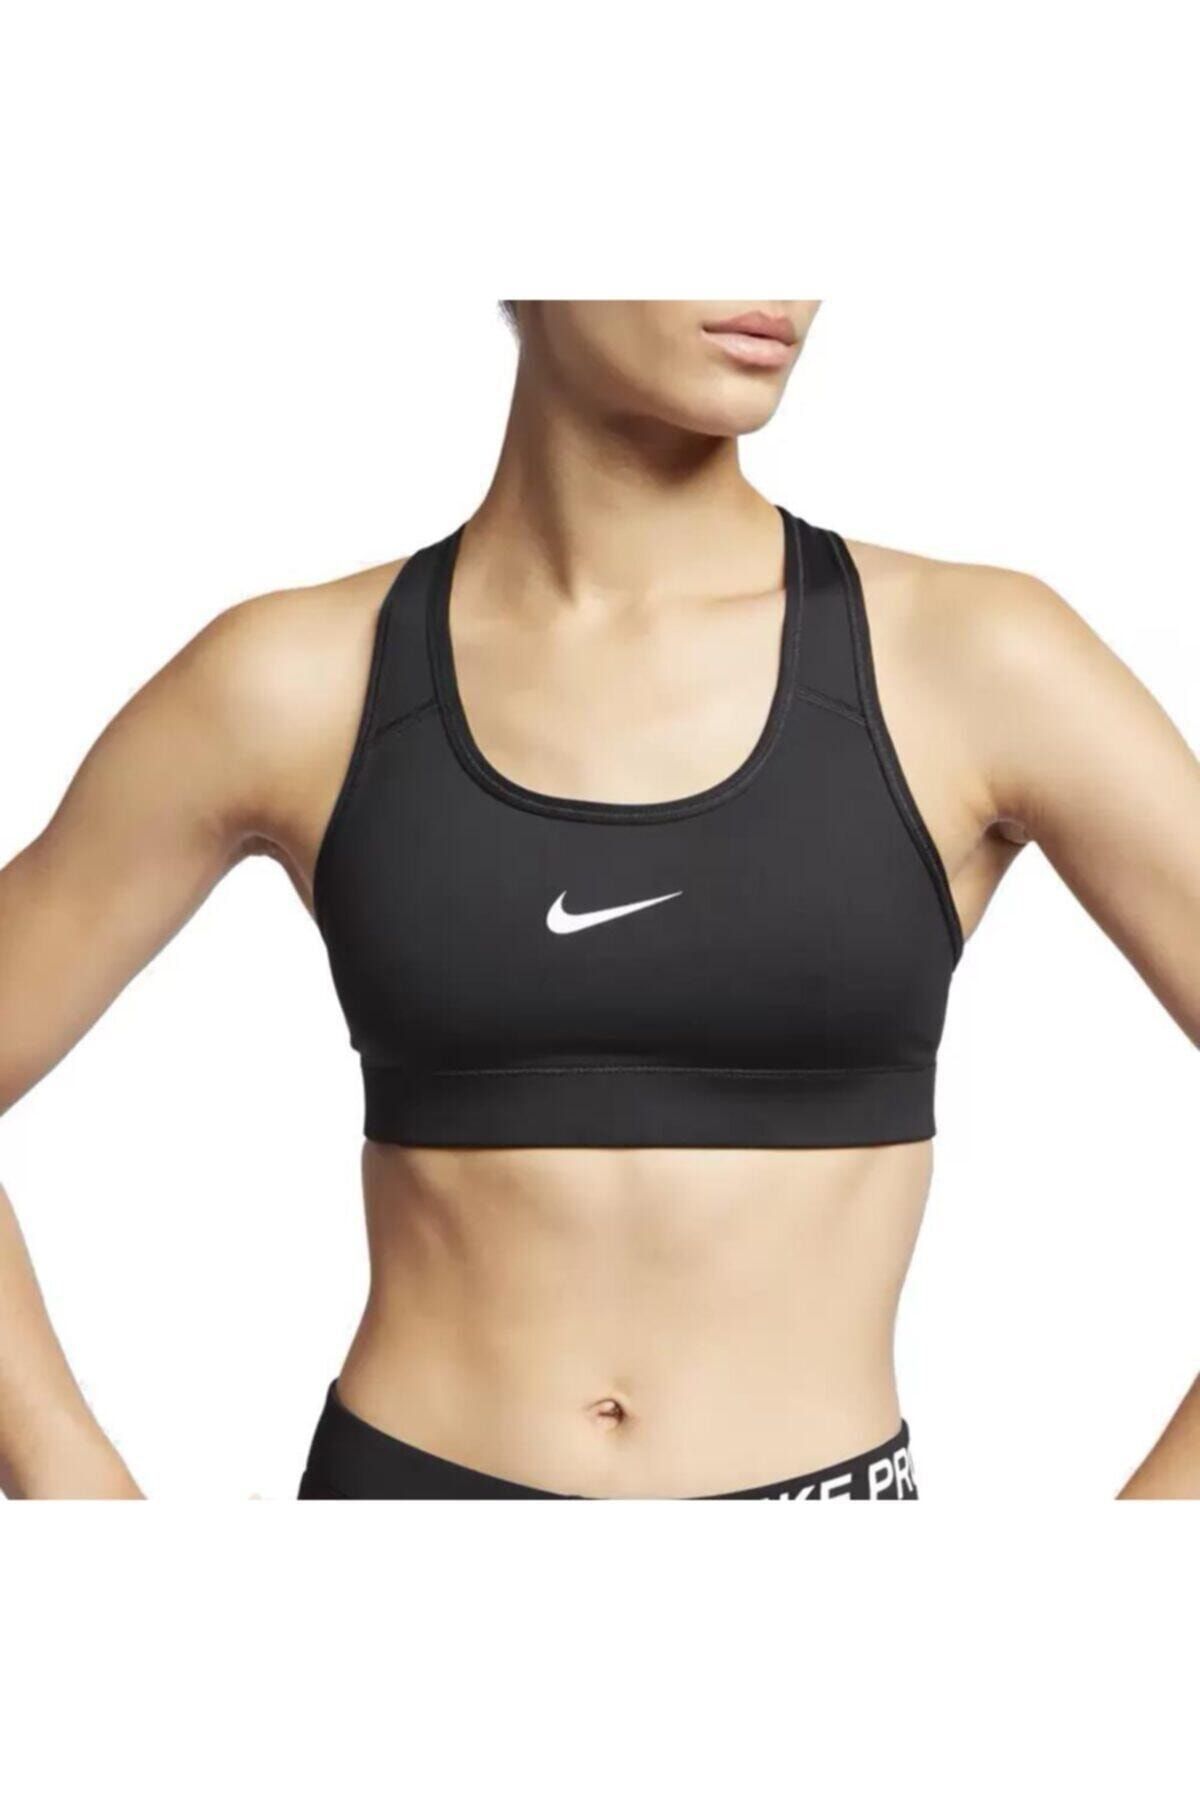 Nike Victory Pro Medium Support Black Women's Sports Bra - 375833-010 -  Trendyol